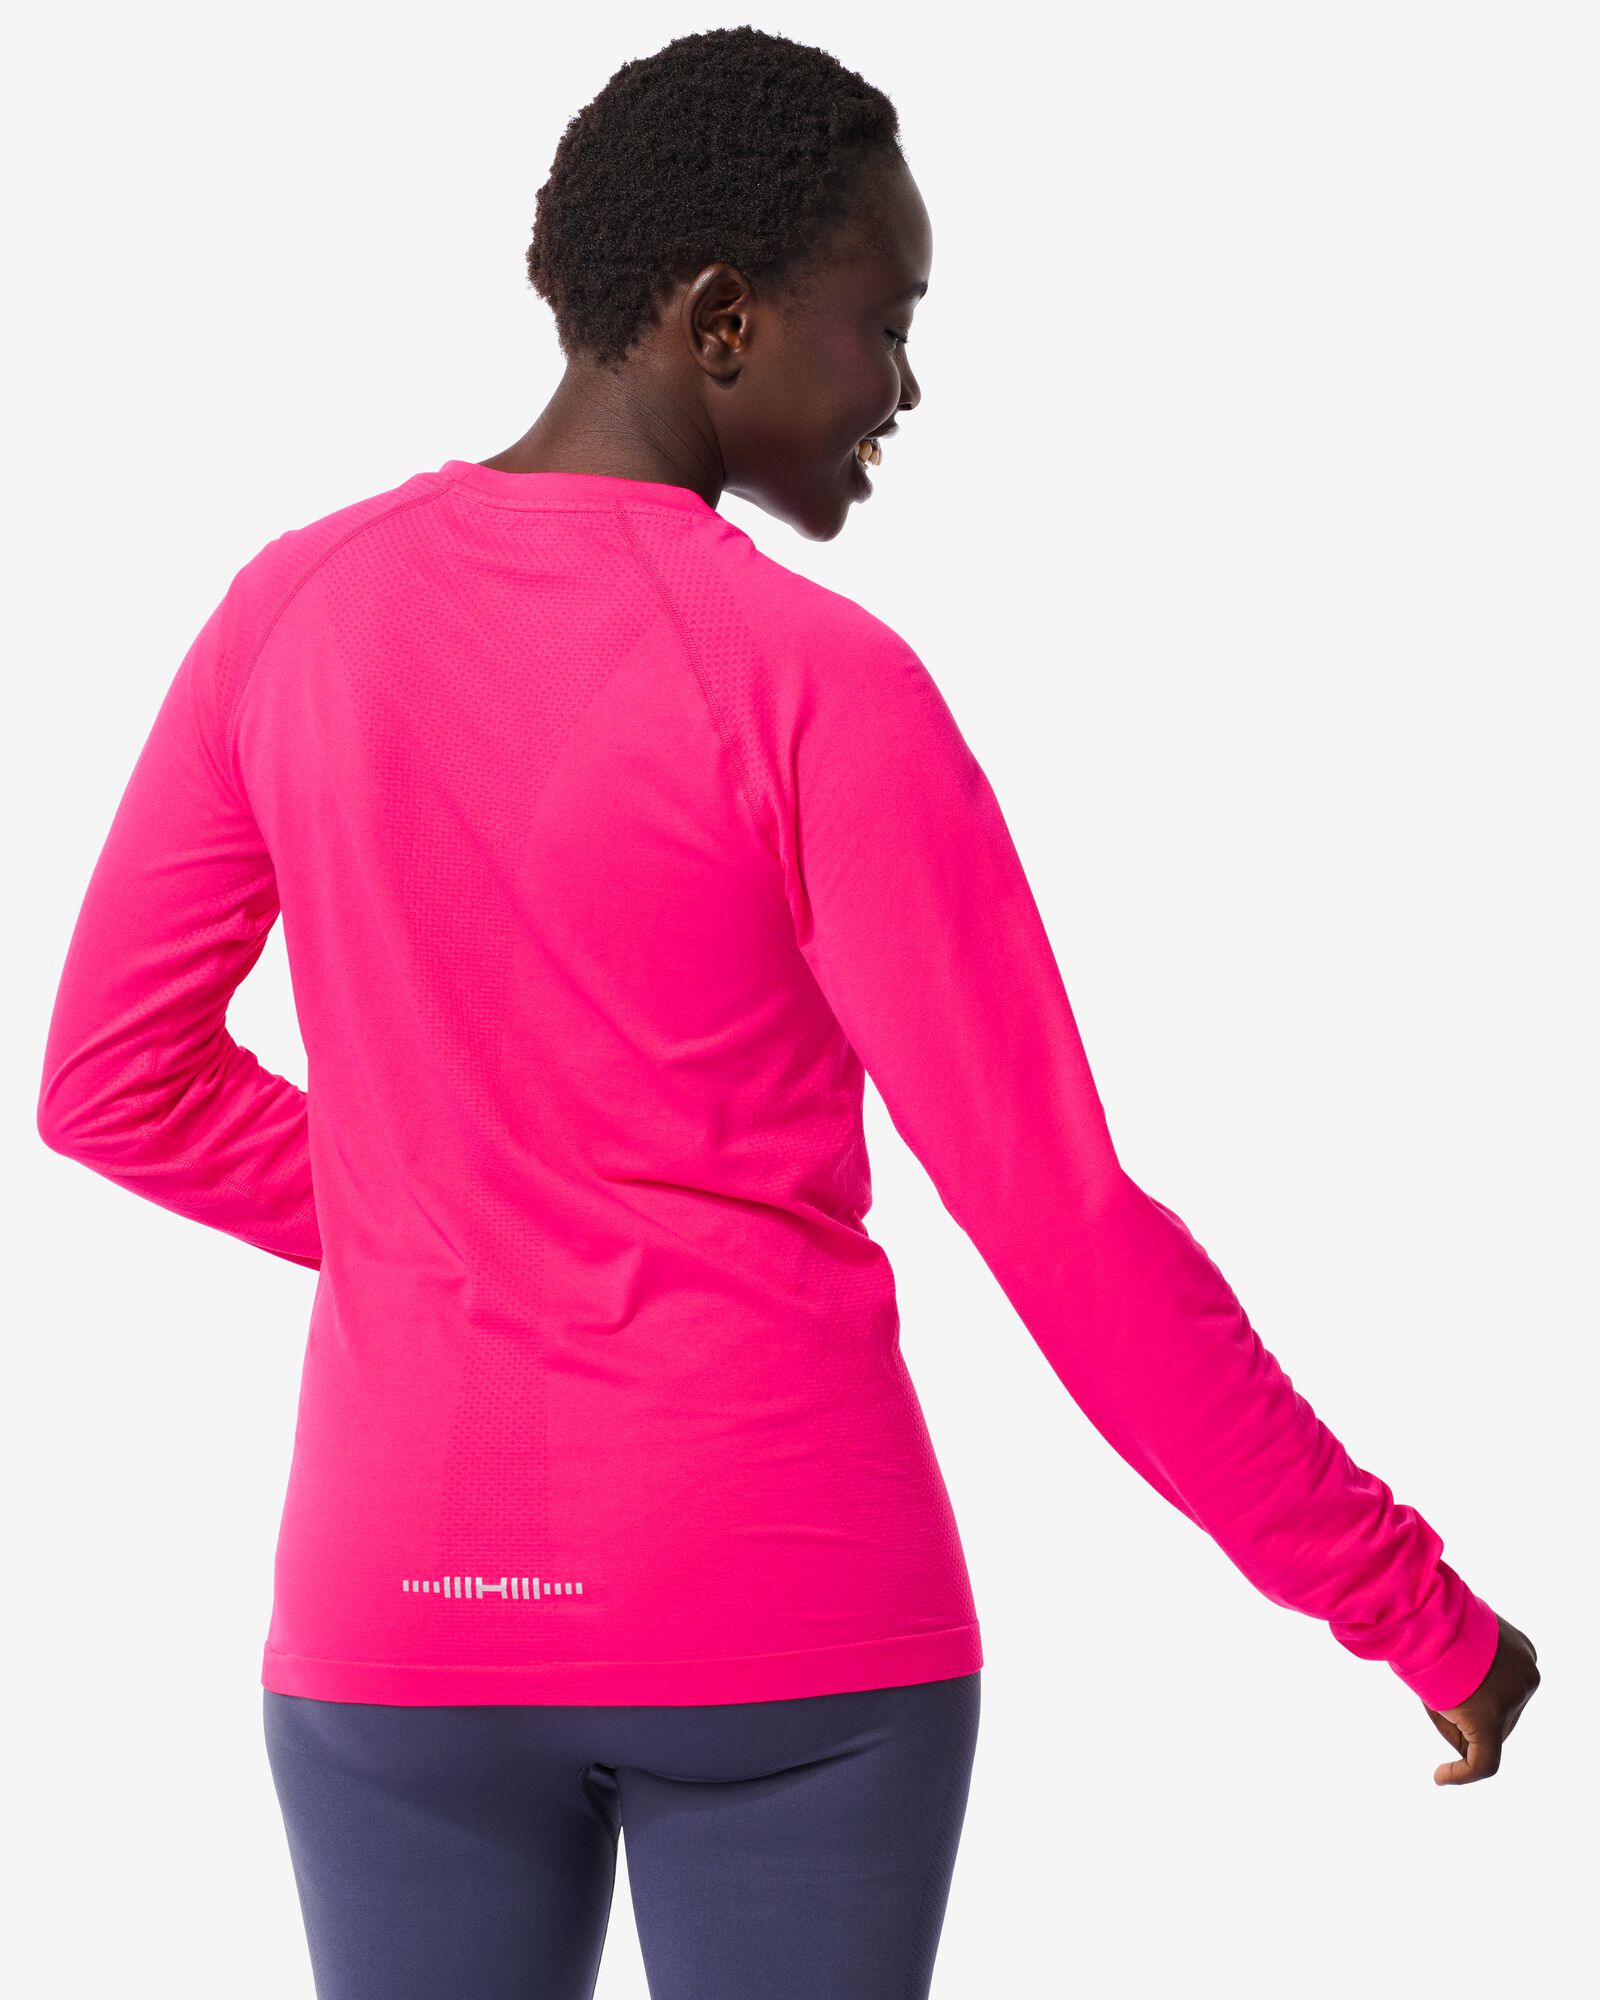 t-shirt de sport femme sans coutures rose rose - 36090134PINK - HEMA